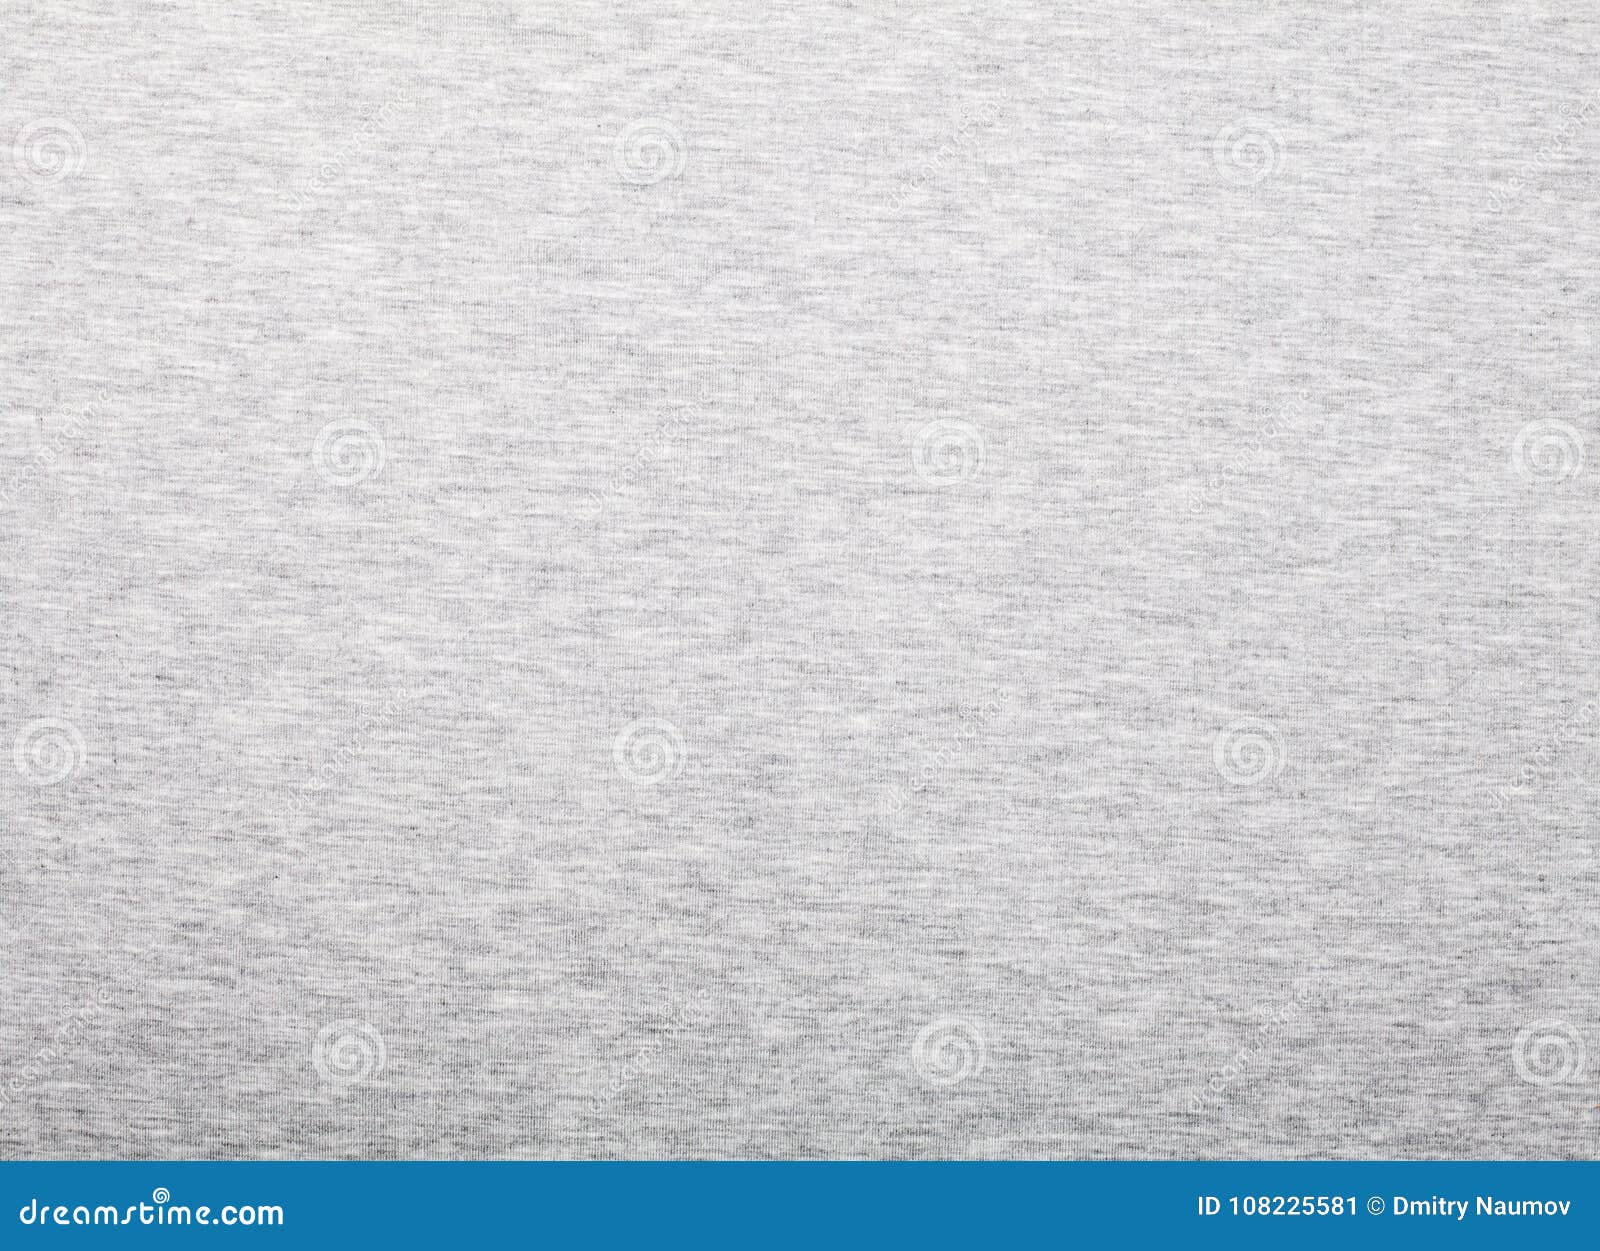 grey t shirt fabric